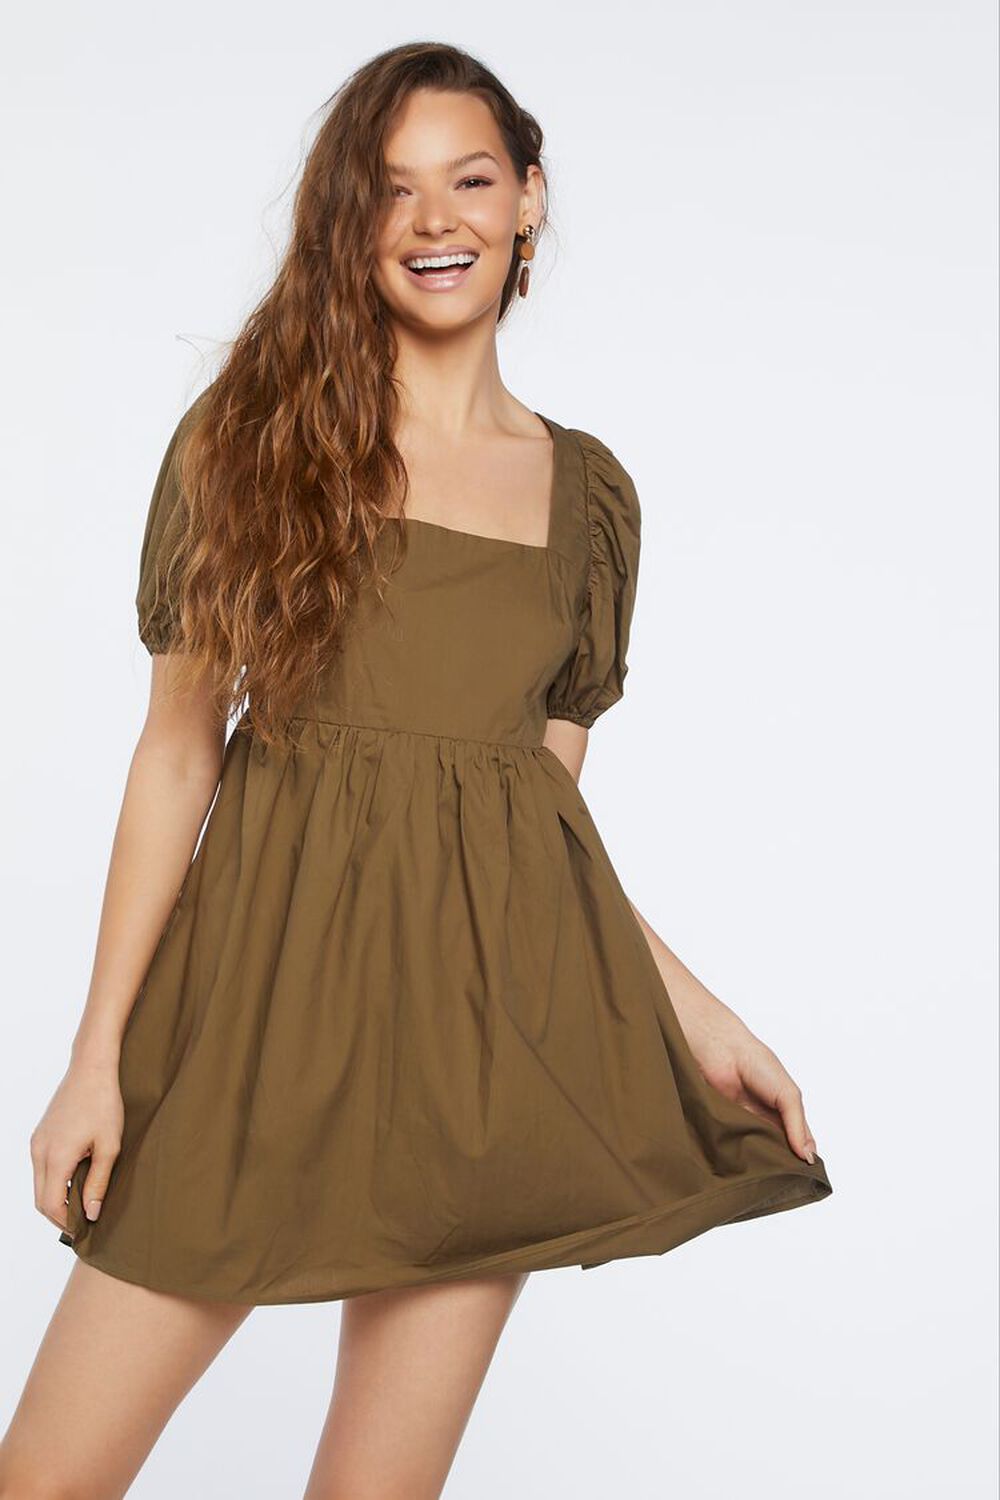 OLIVE Puff-Sleeve Mini Dress, image 1